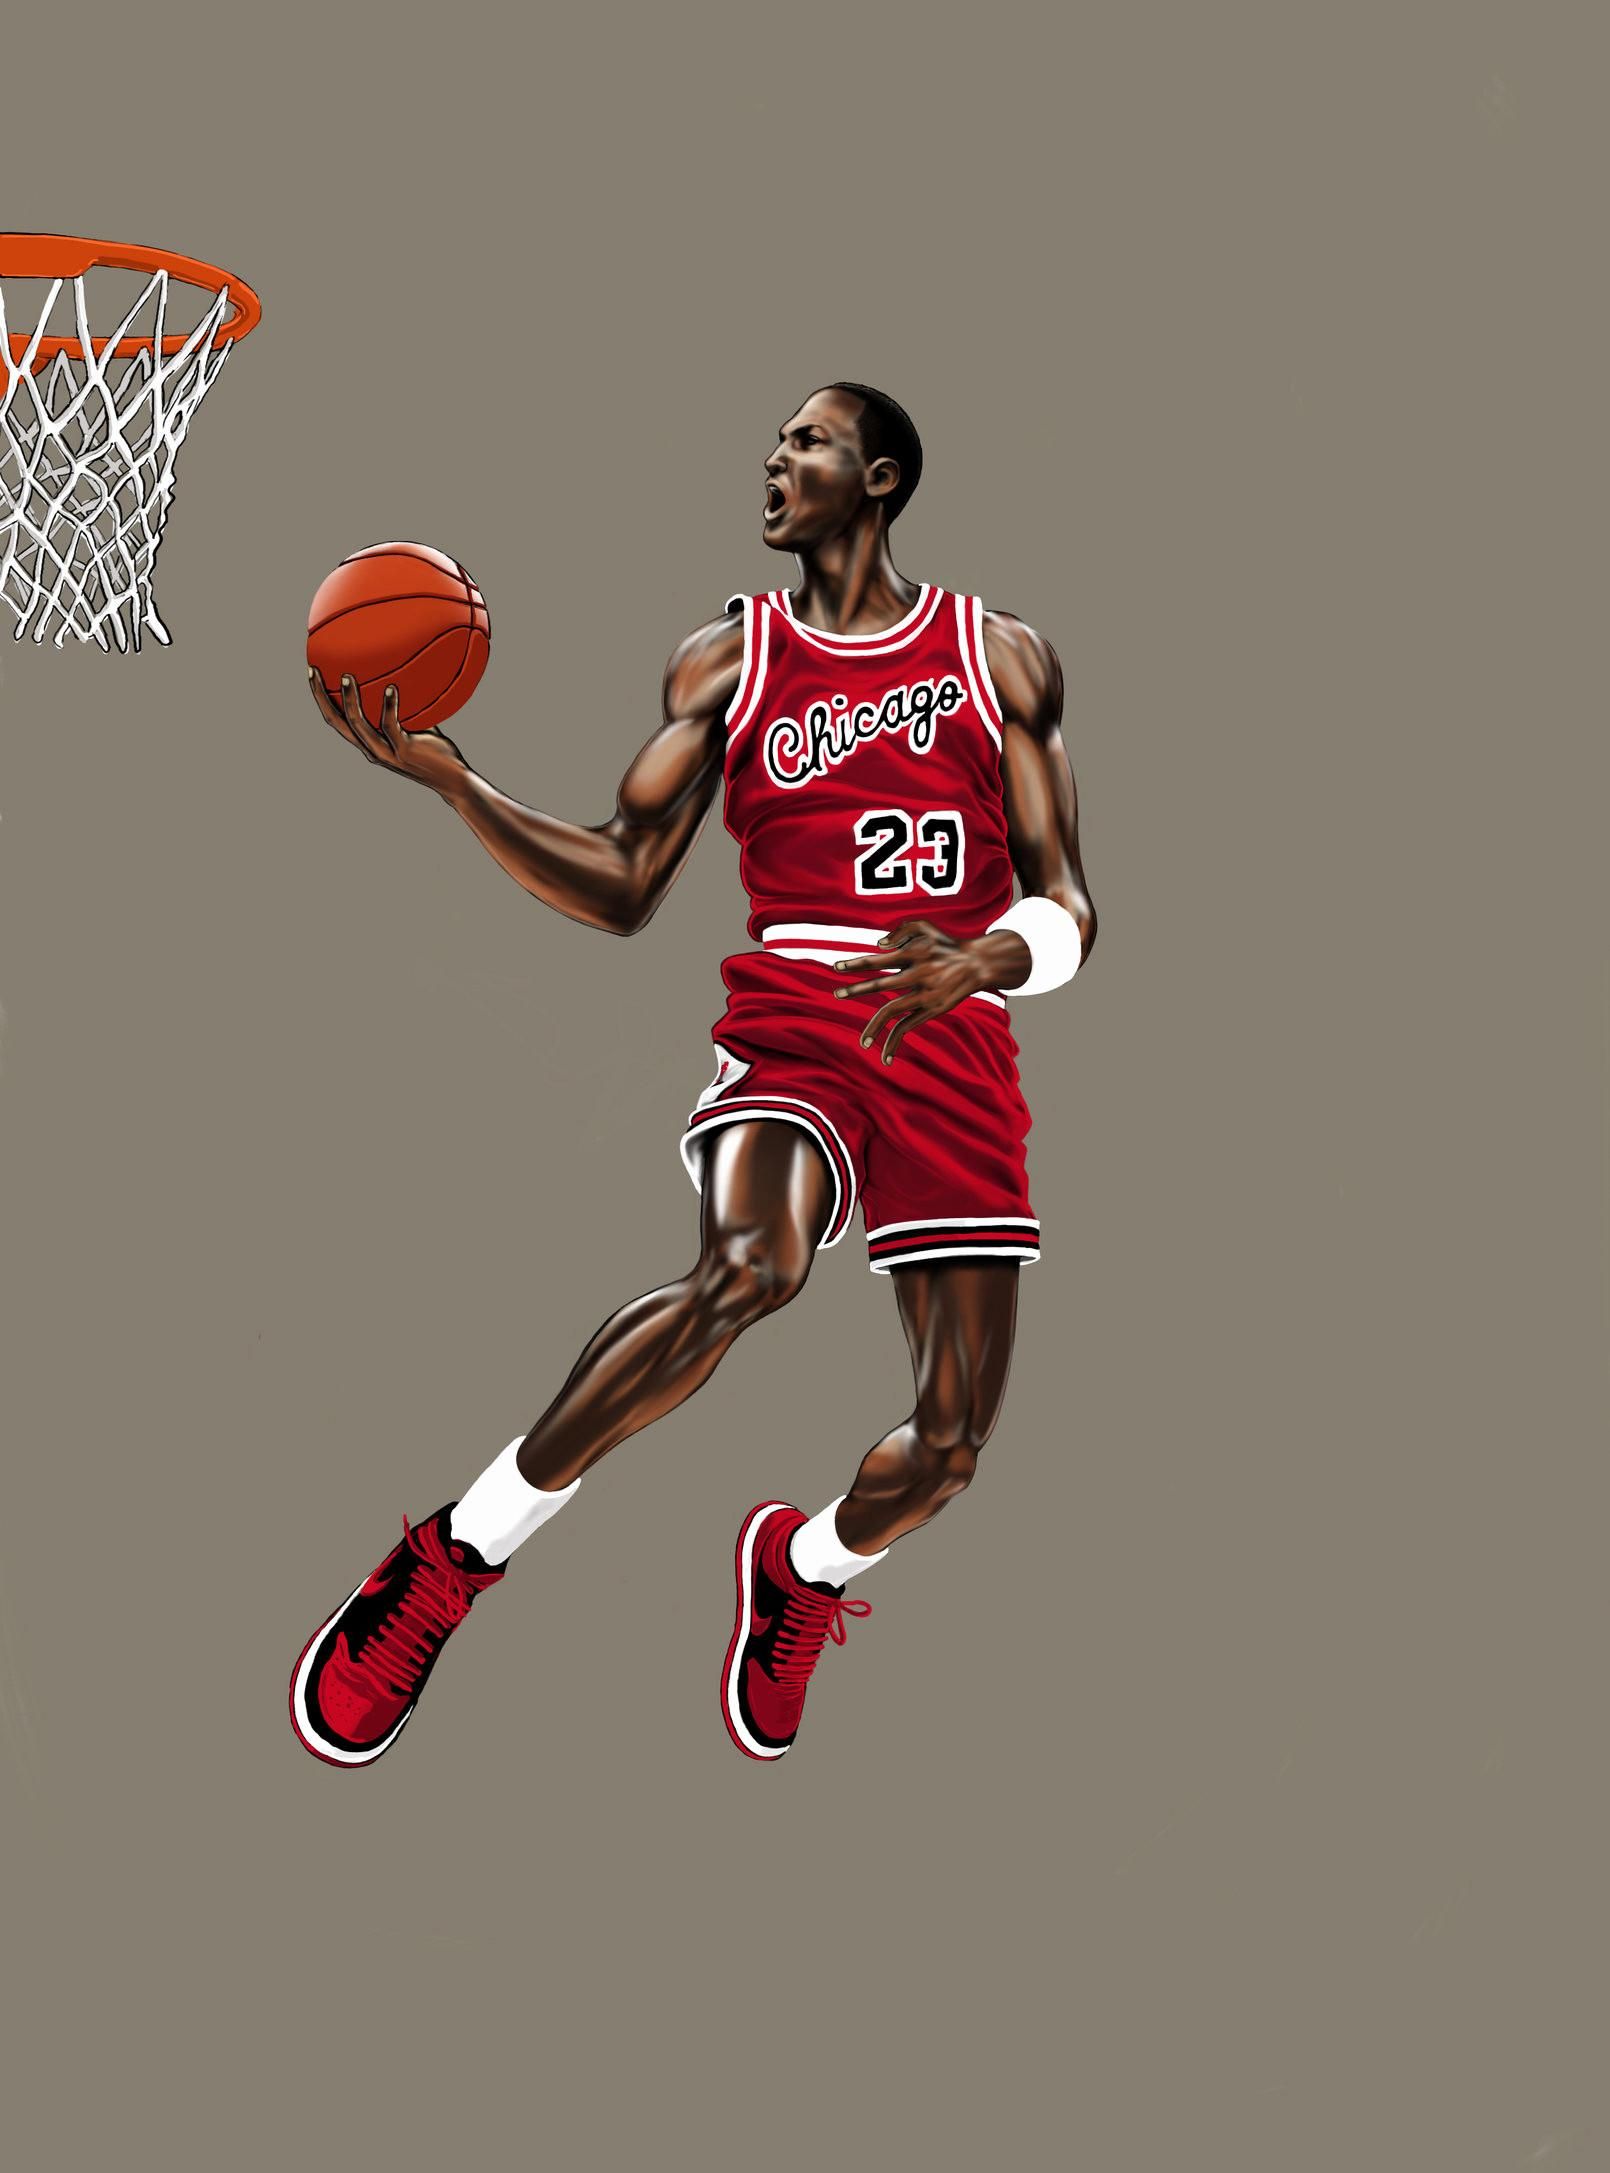 Michael Jordan Background Image HD. All White Background